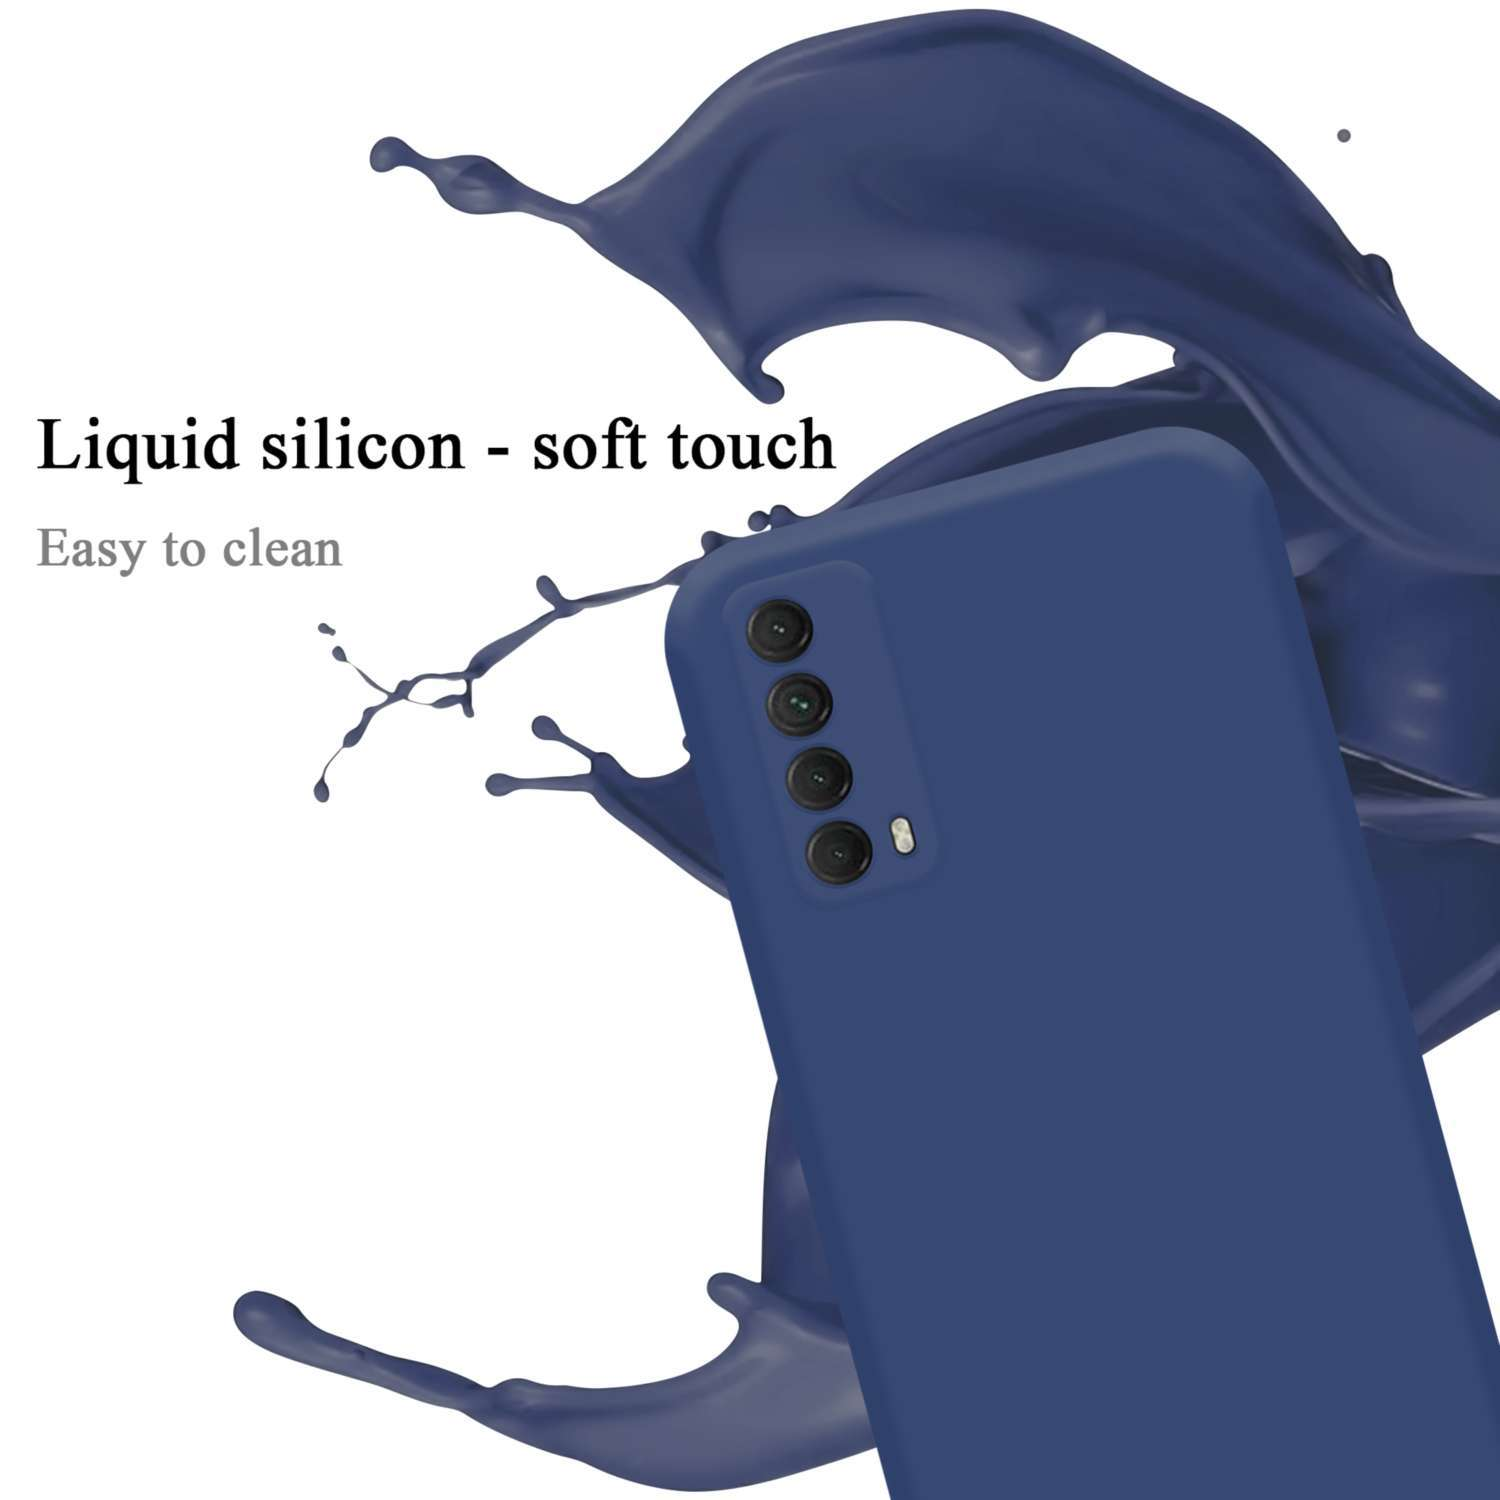 CADORABO Hülle im Liquid Silicone LIQUID BLAU P 2021, Case SMART Huawei, Backcover, Style